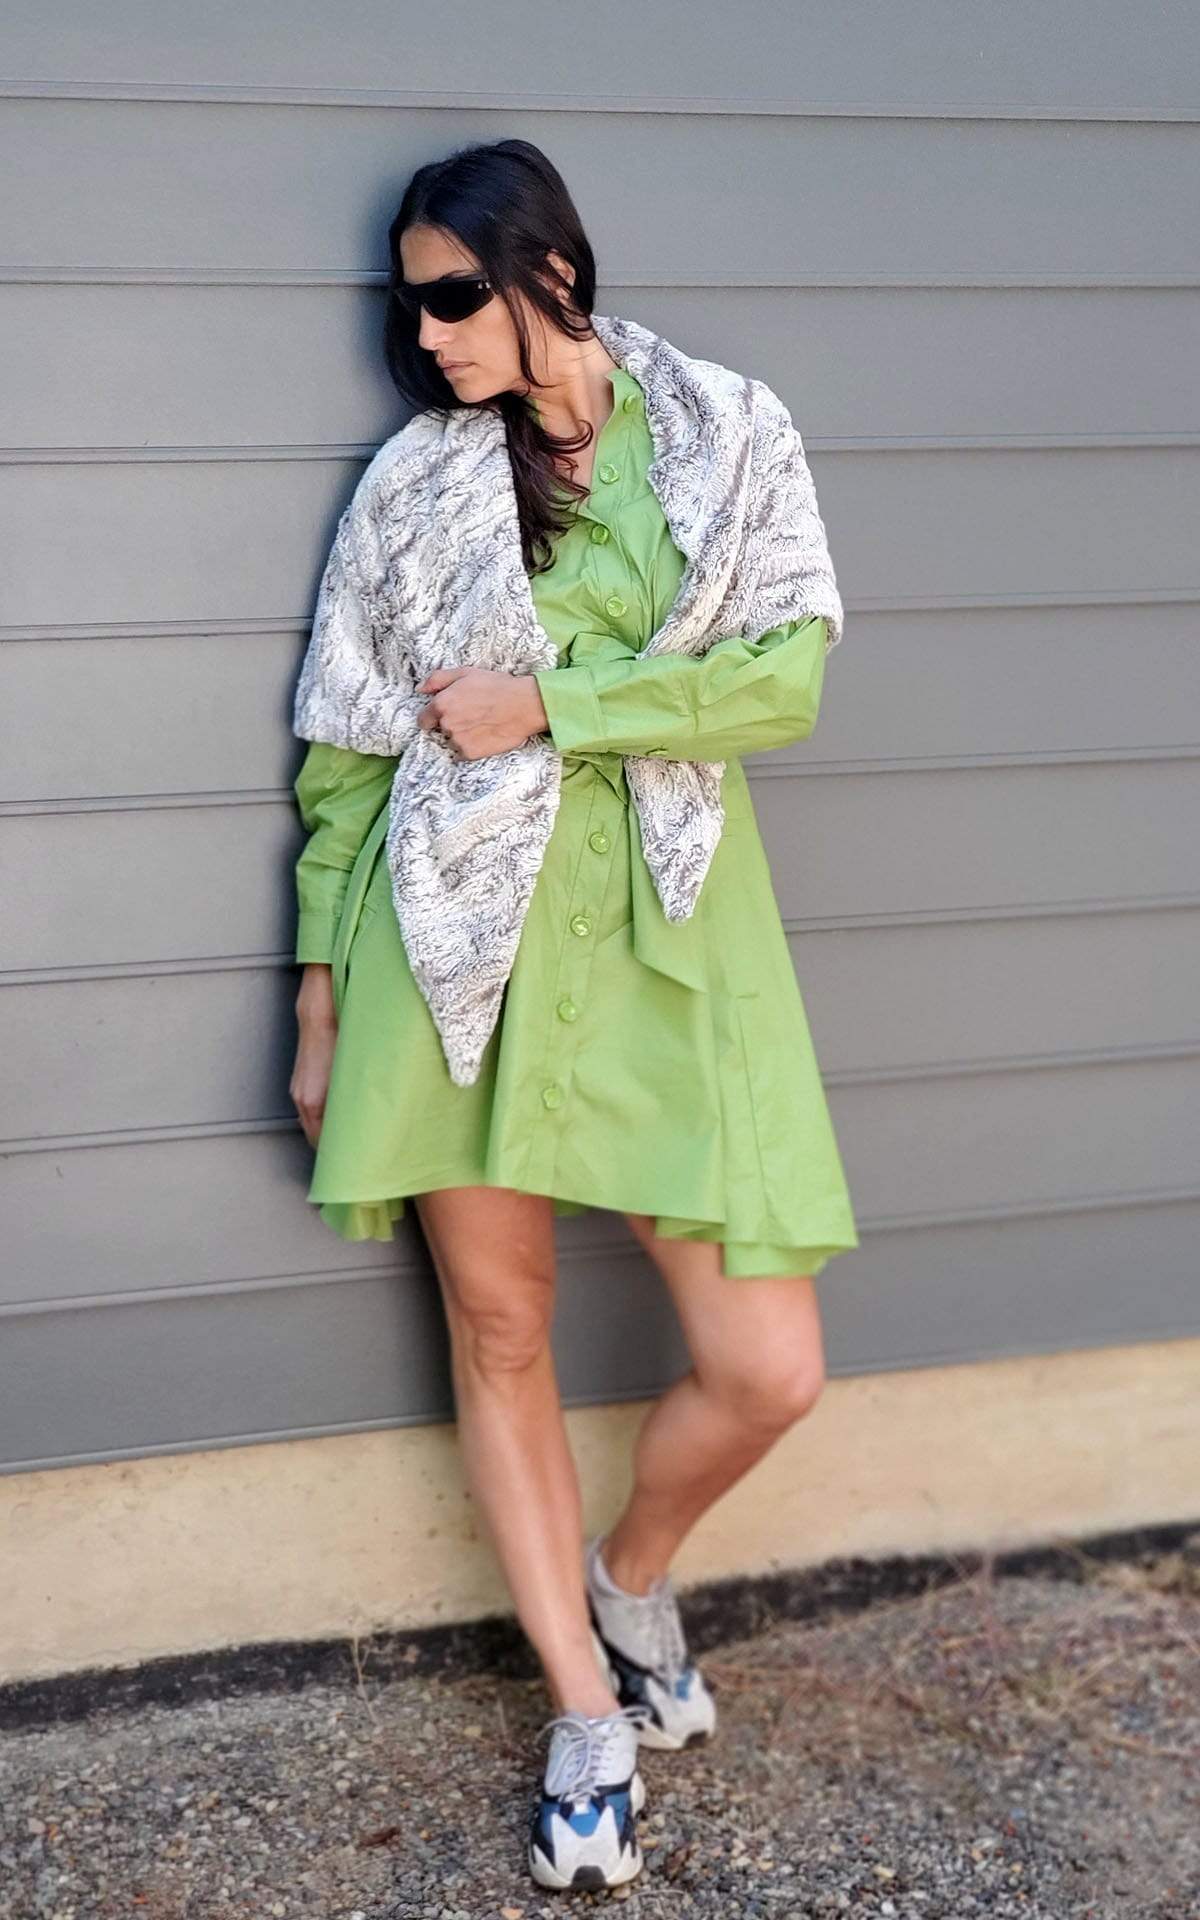 Model wearing Bermuda triangle scarf | Khaki faux fur, cream, gray | Handmade by Pandemonium Millinery Seattle, WA USA